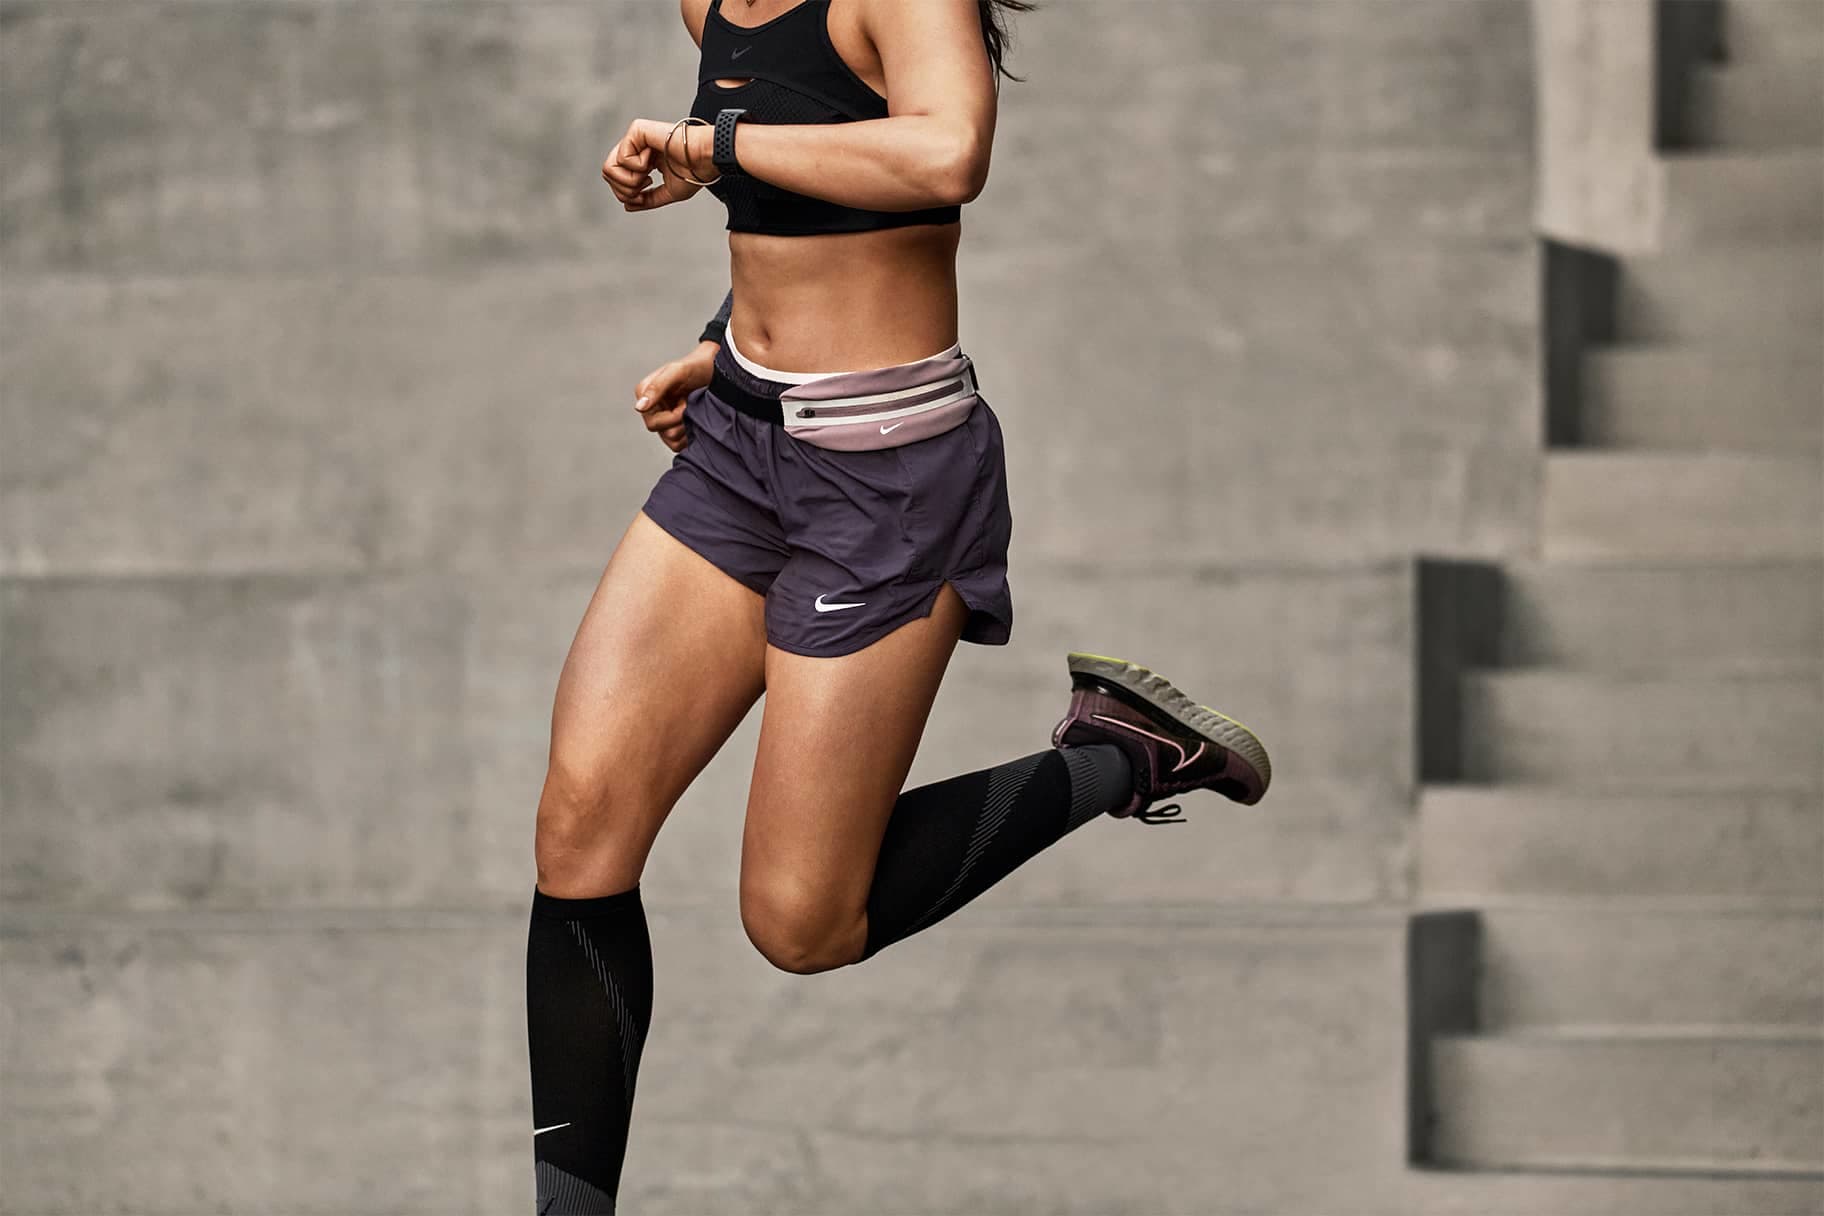 Verus Ladies Compression Shorts Sports Exercise Running/Walking Yoga Fitness 